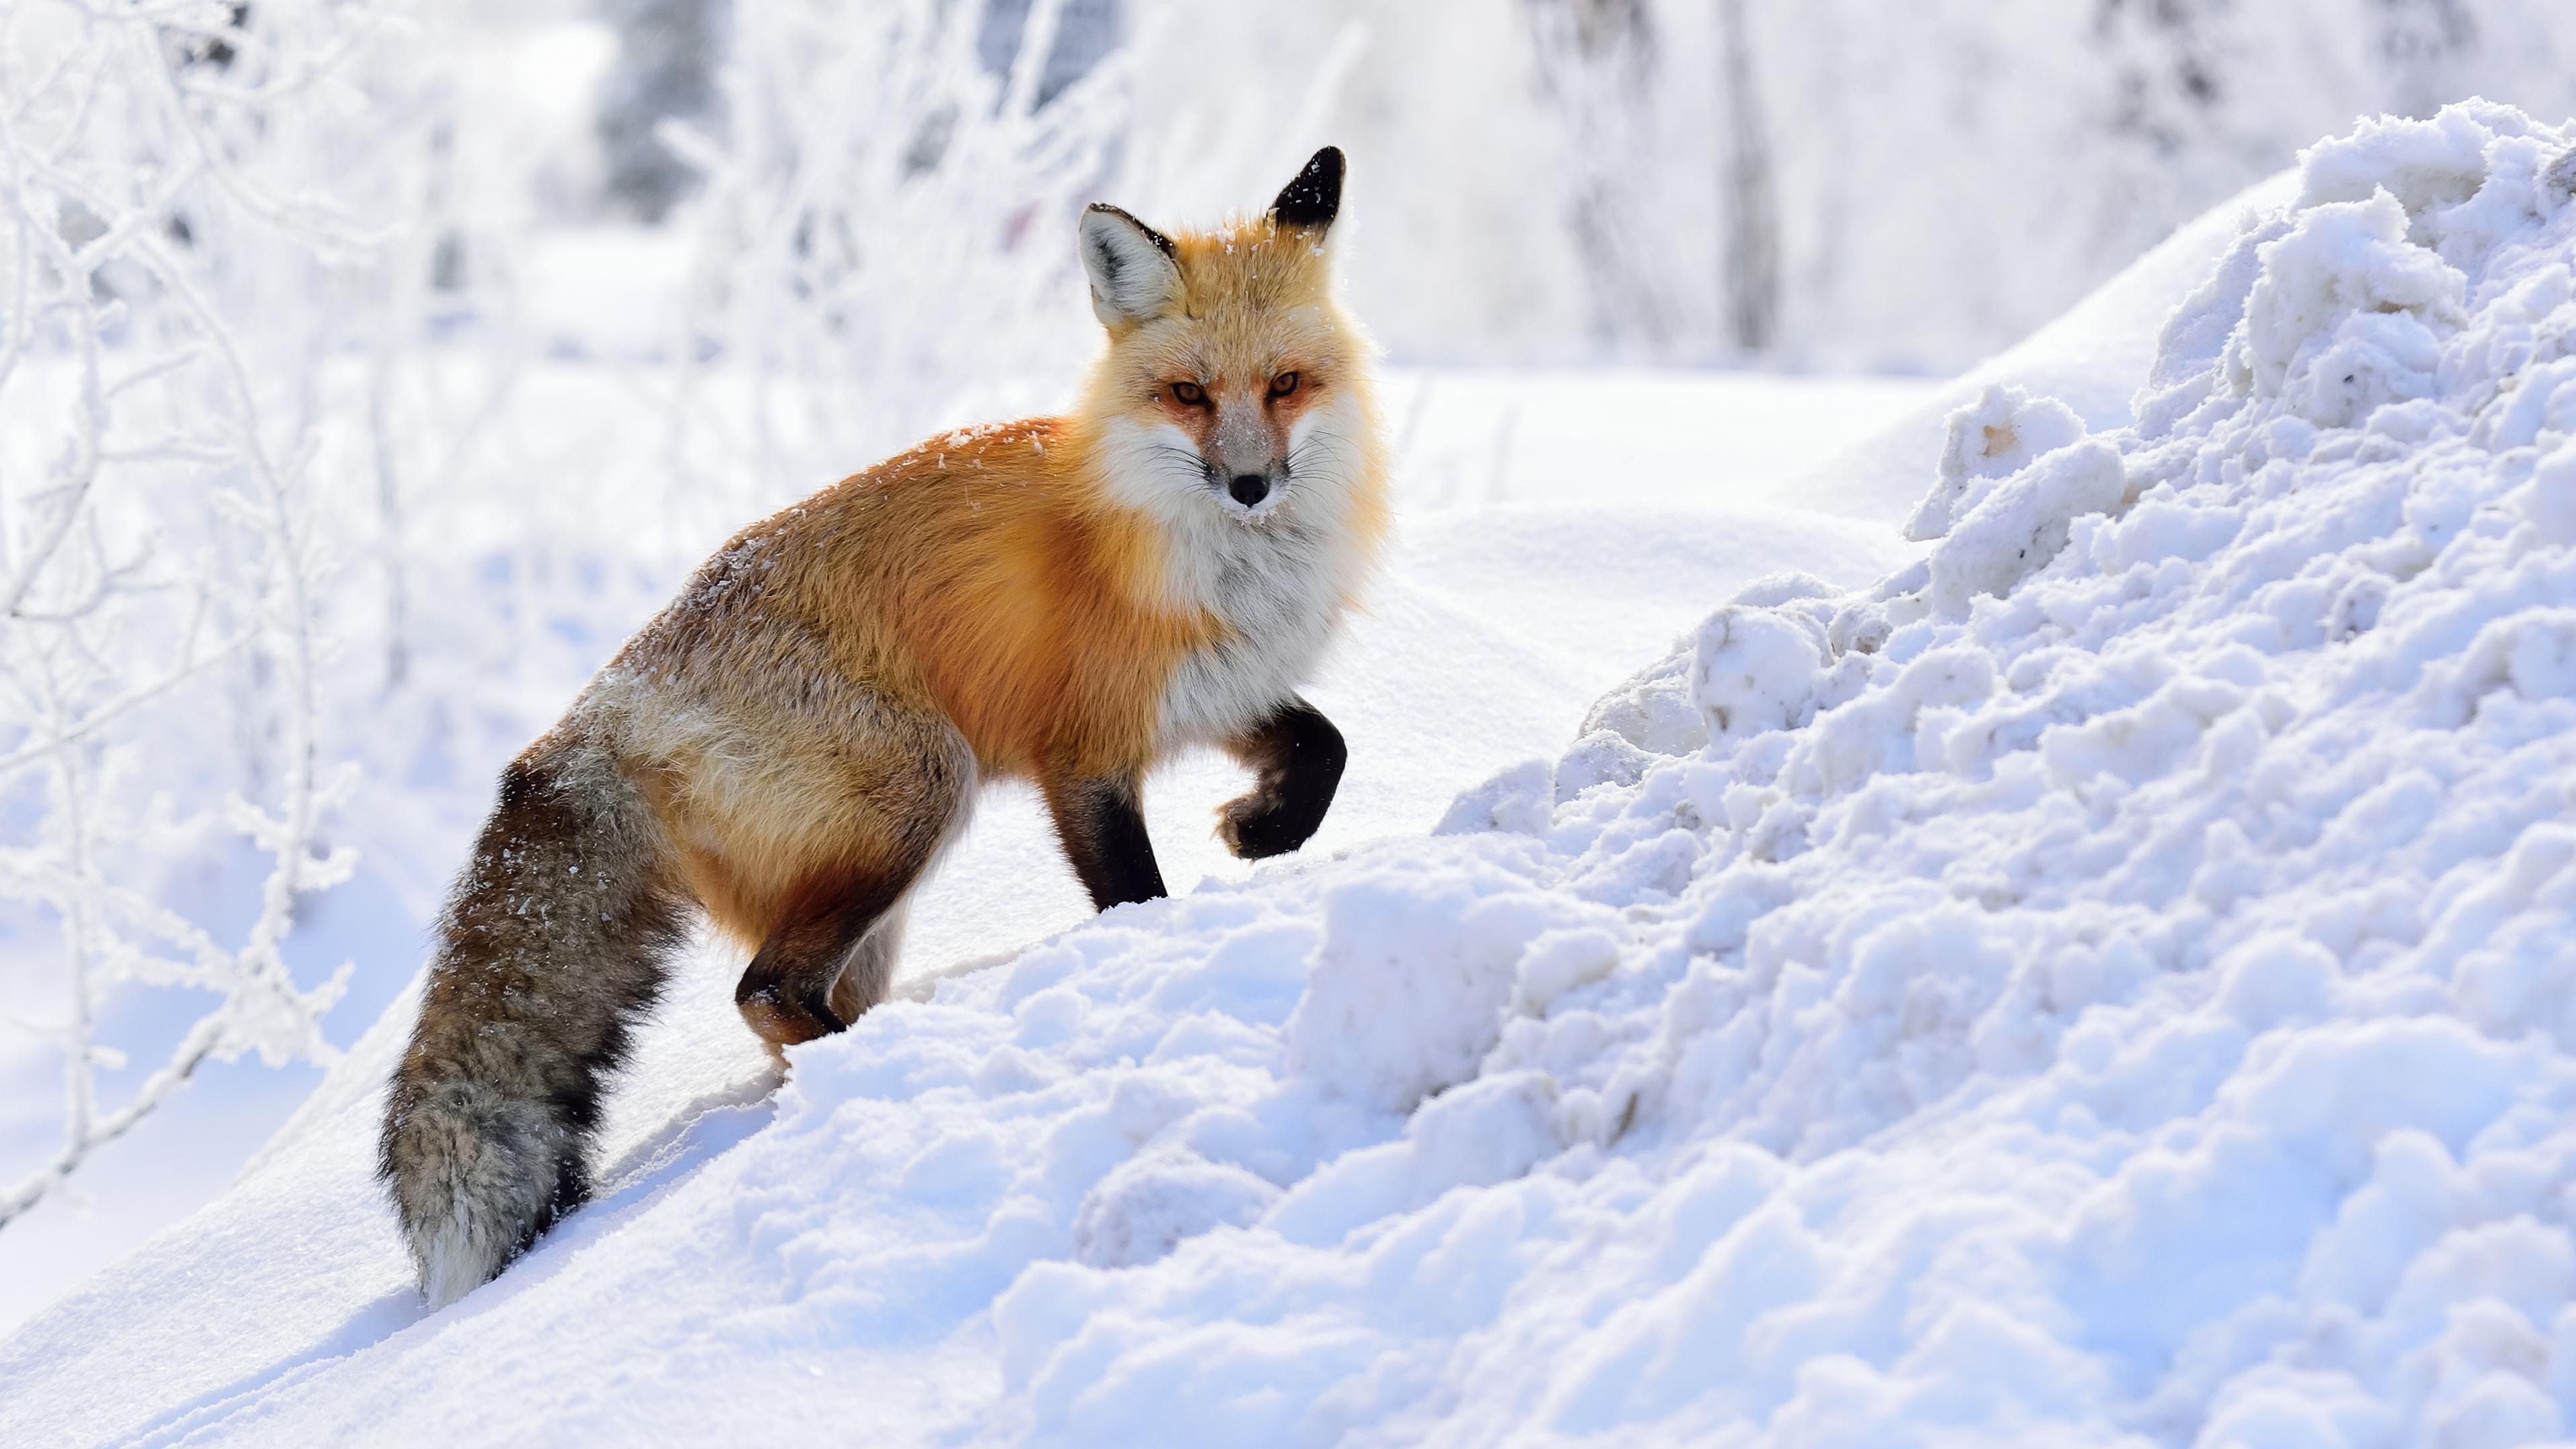 Wild fox climb on the snow - HD wild animal in winter season